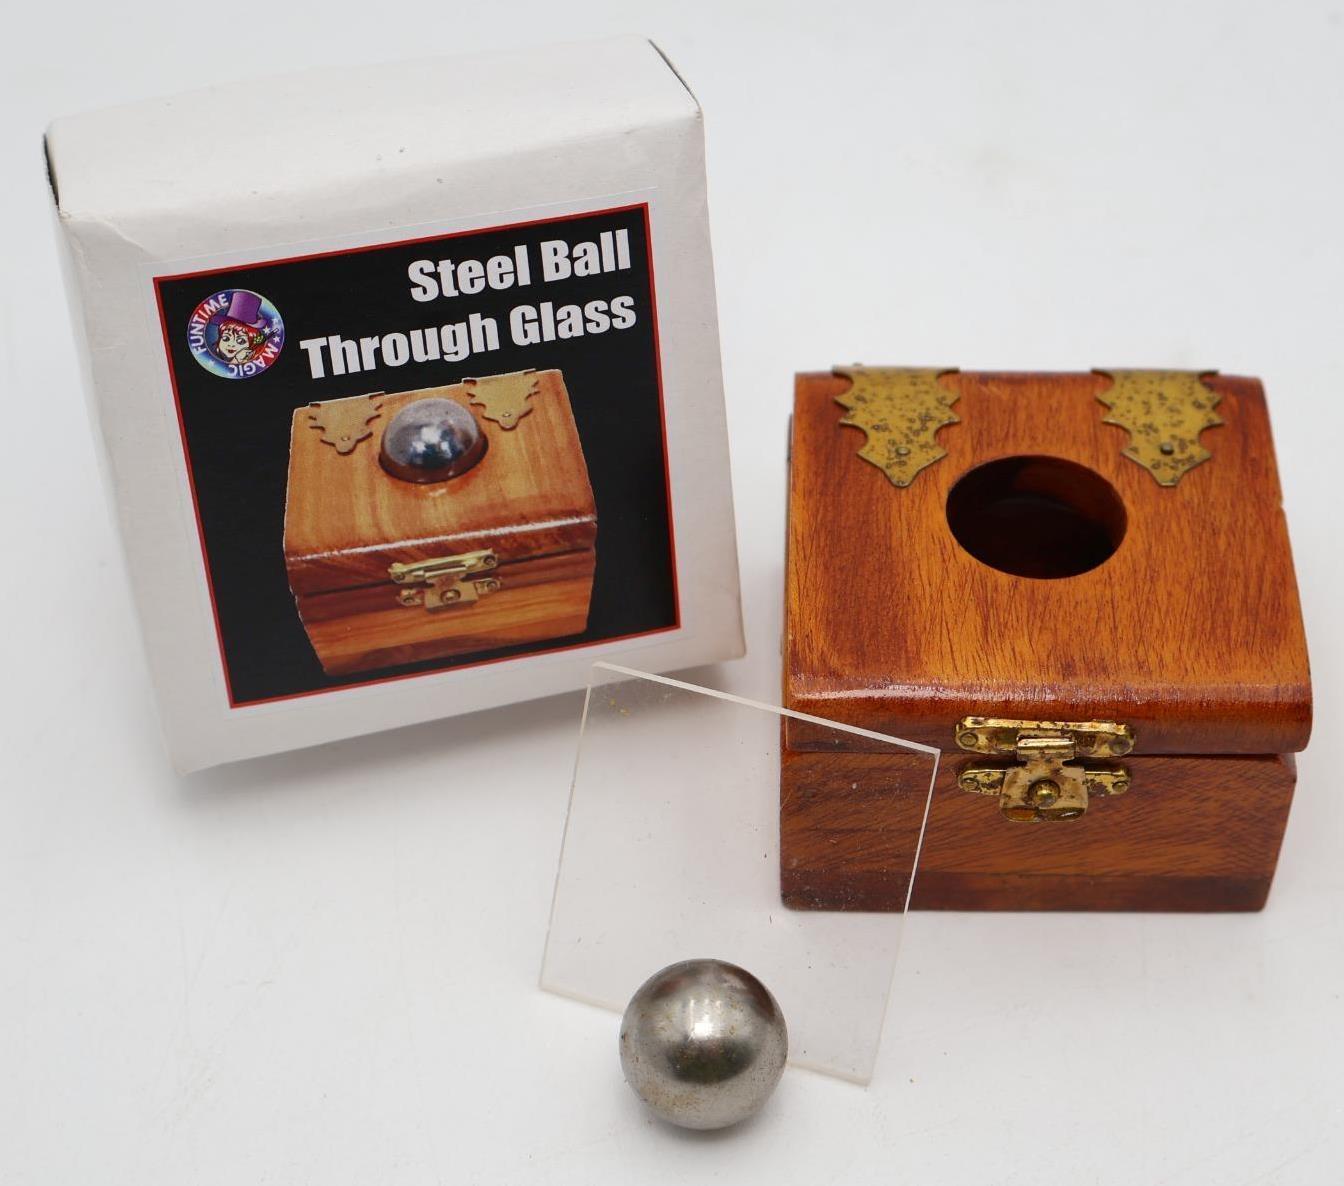 Steel Ball Thru Glass by Funtime Wooden Box Steel Ball Through Glass Magic Trick